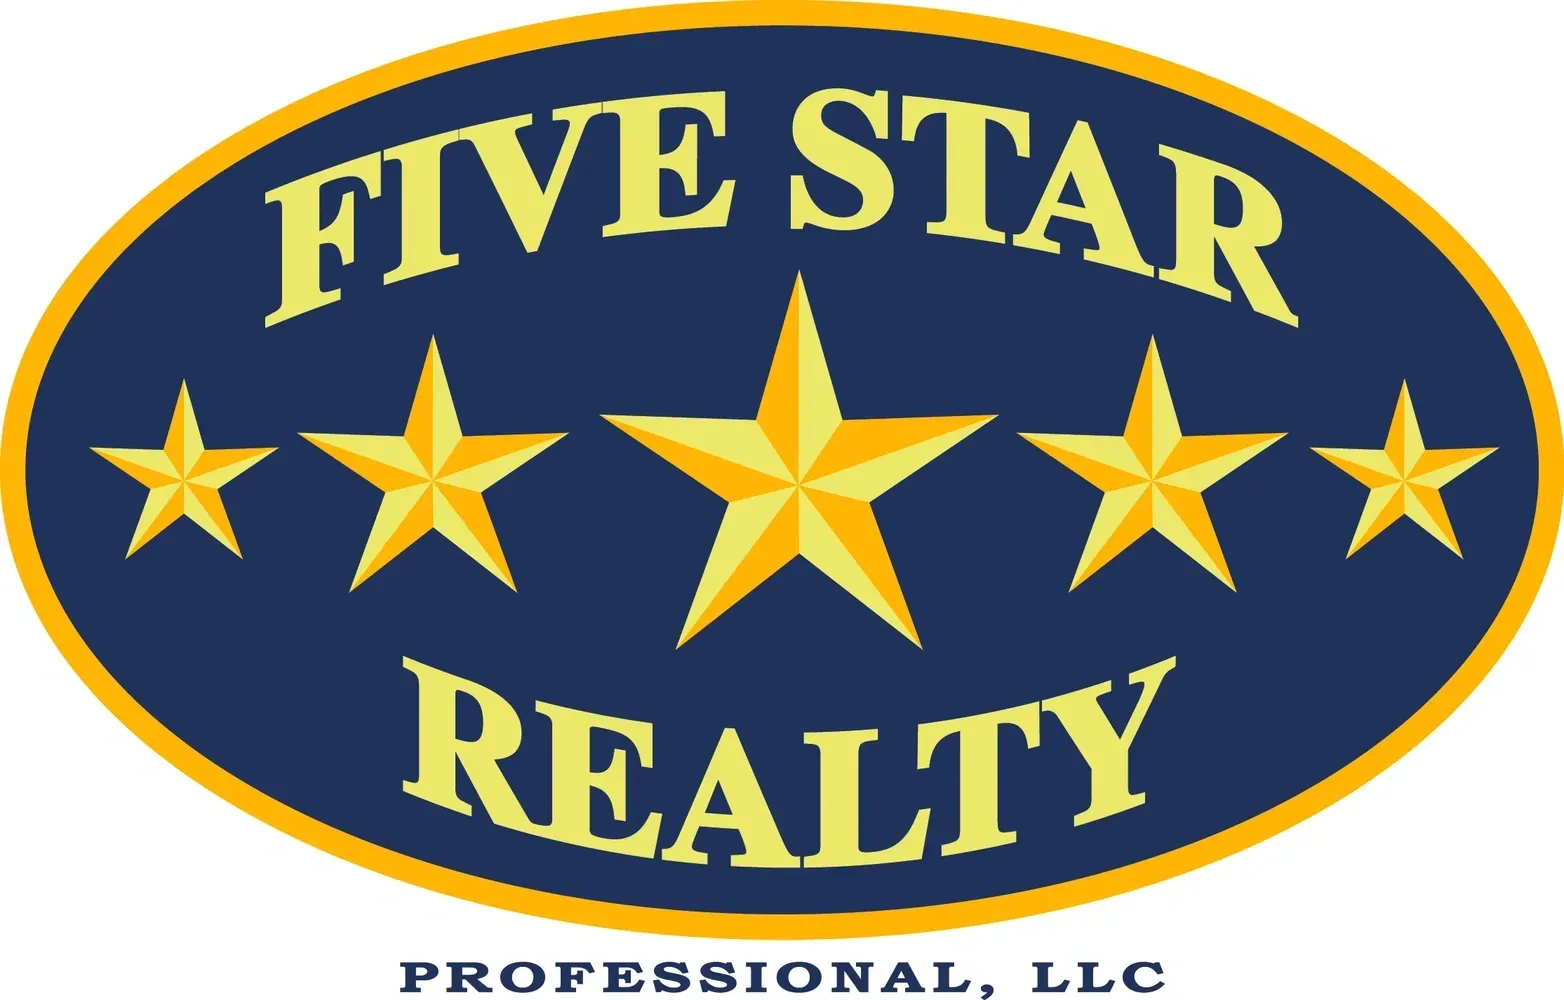 Five Star Realty Professional, LLC